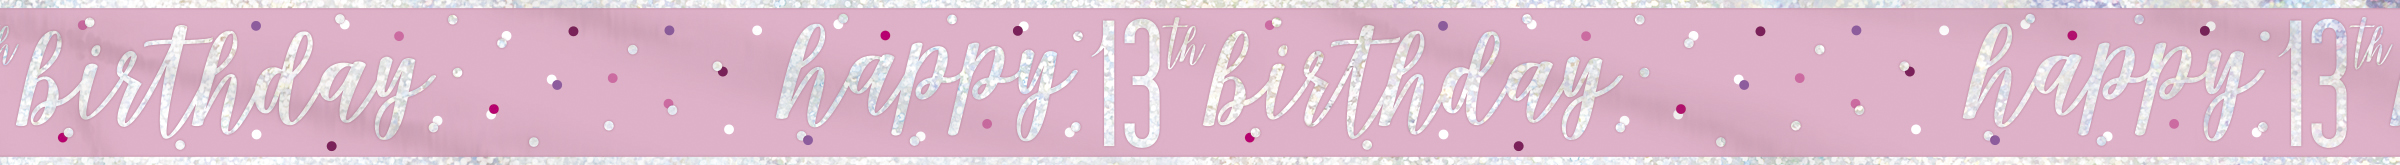 Happy 13th Birthday Glitz Pink & Silver Banner